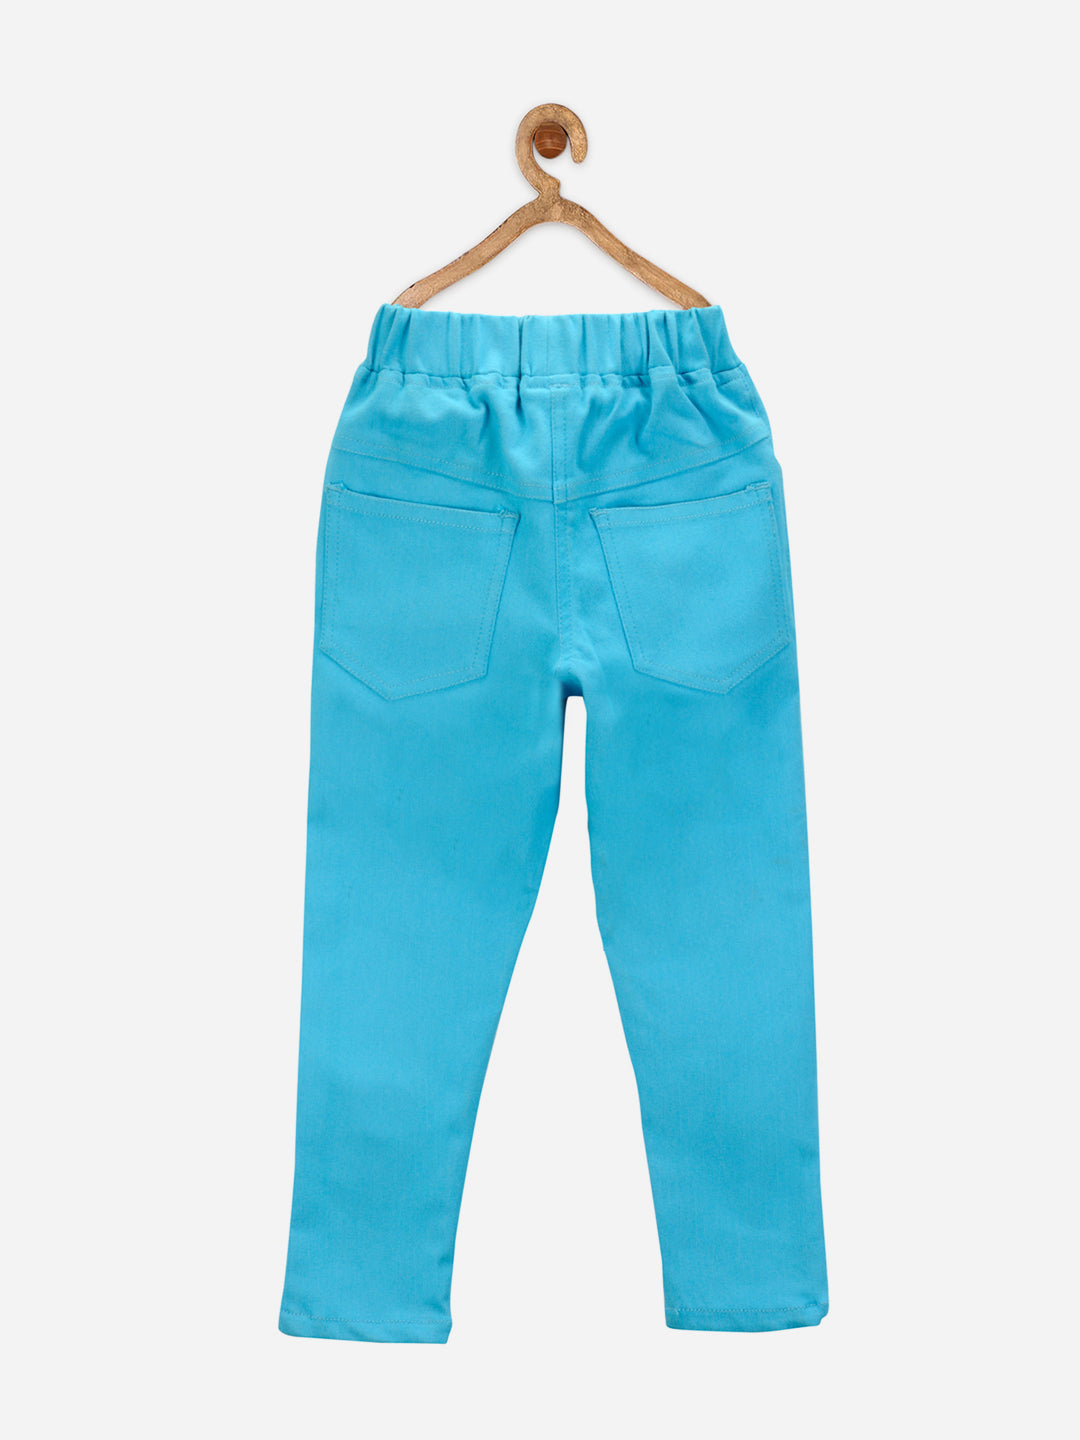 Girls TurquoiseBlue Stretchable Denim Jeggings cum Jeans